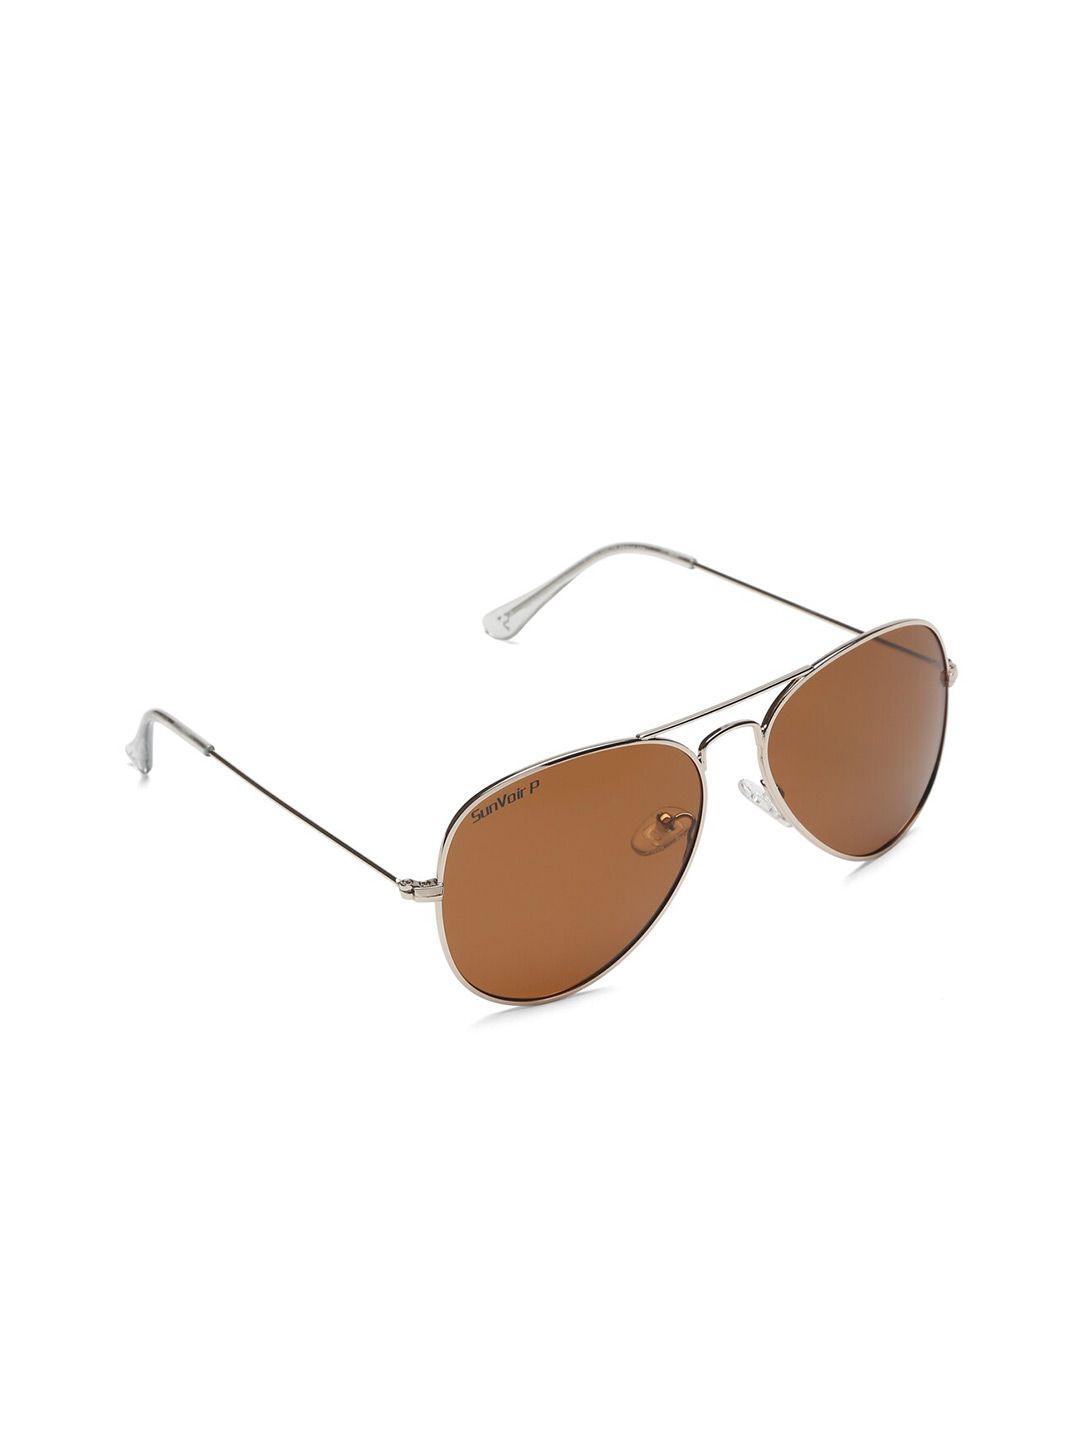 sunvoir unisex brown lens & silver-toned aviator sunglasses with polarised lens